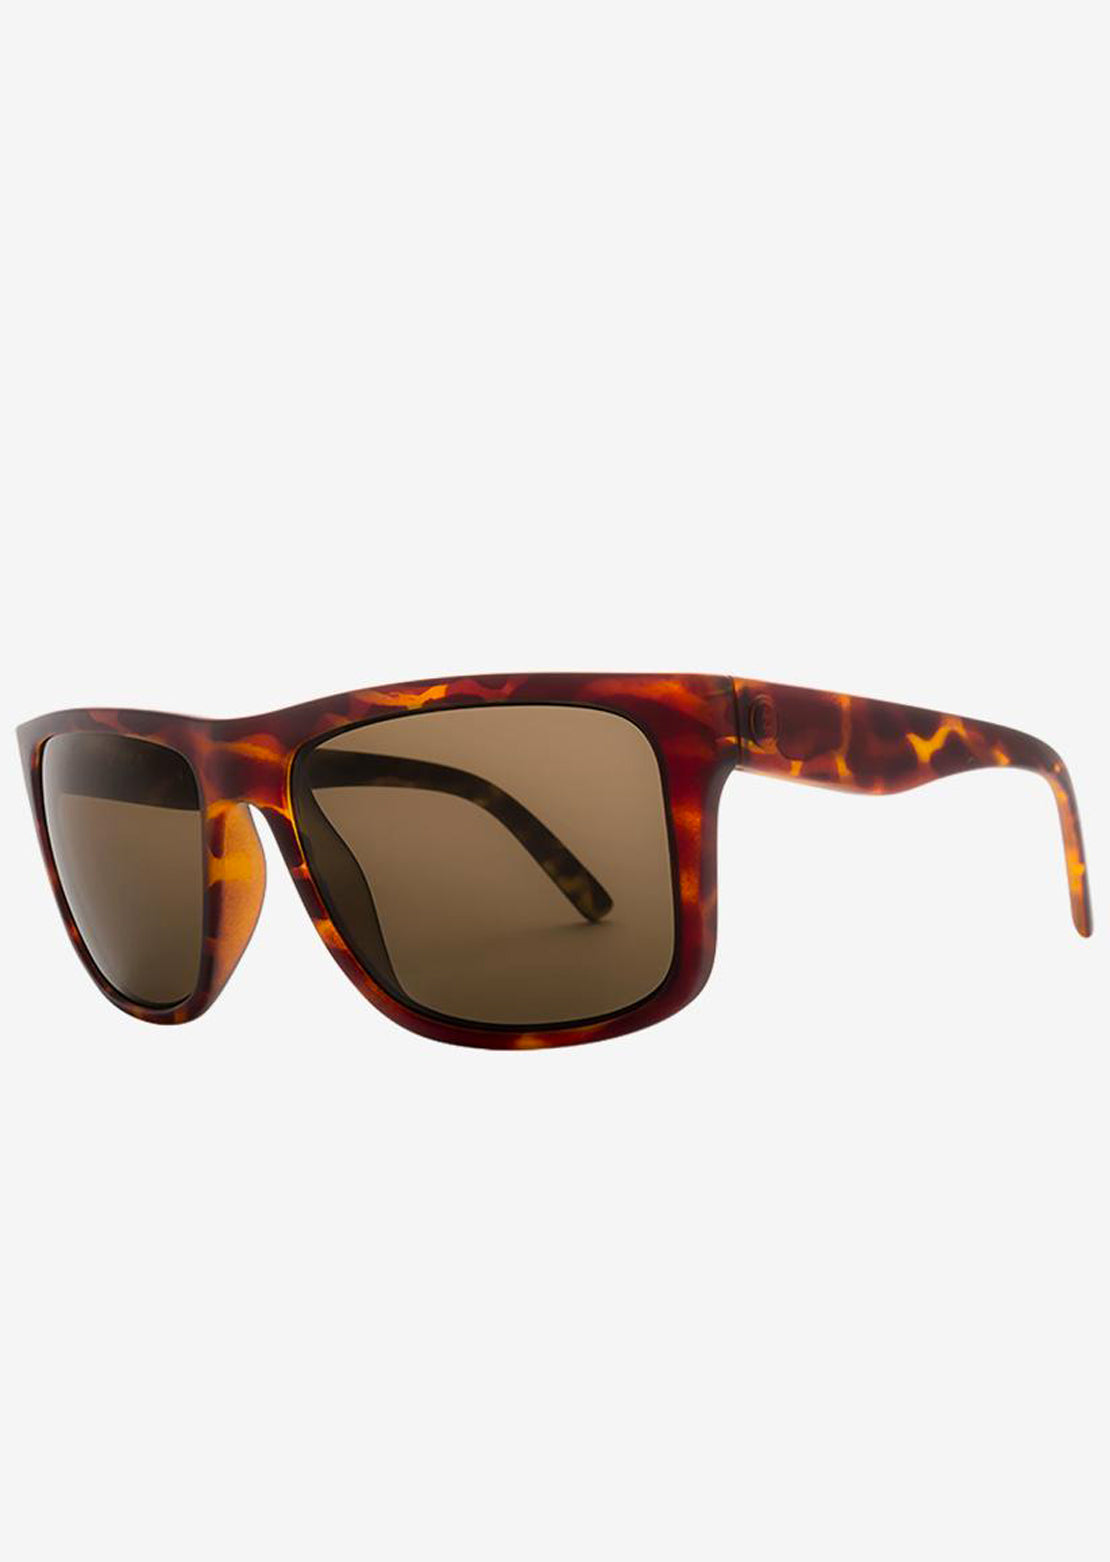 Electric Men’s Swingarm XL Polarized Sunglasses Matte Tortoise/Bronze